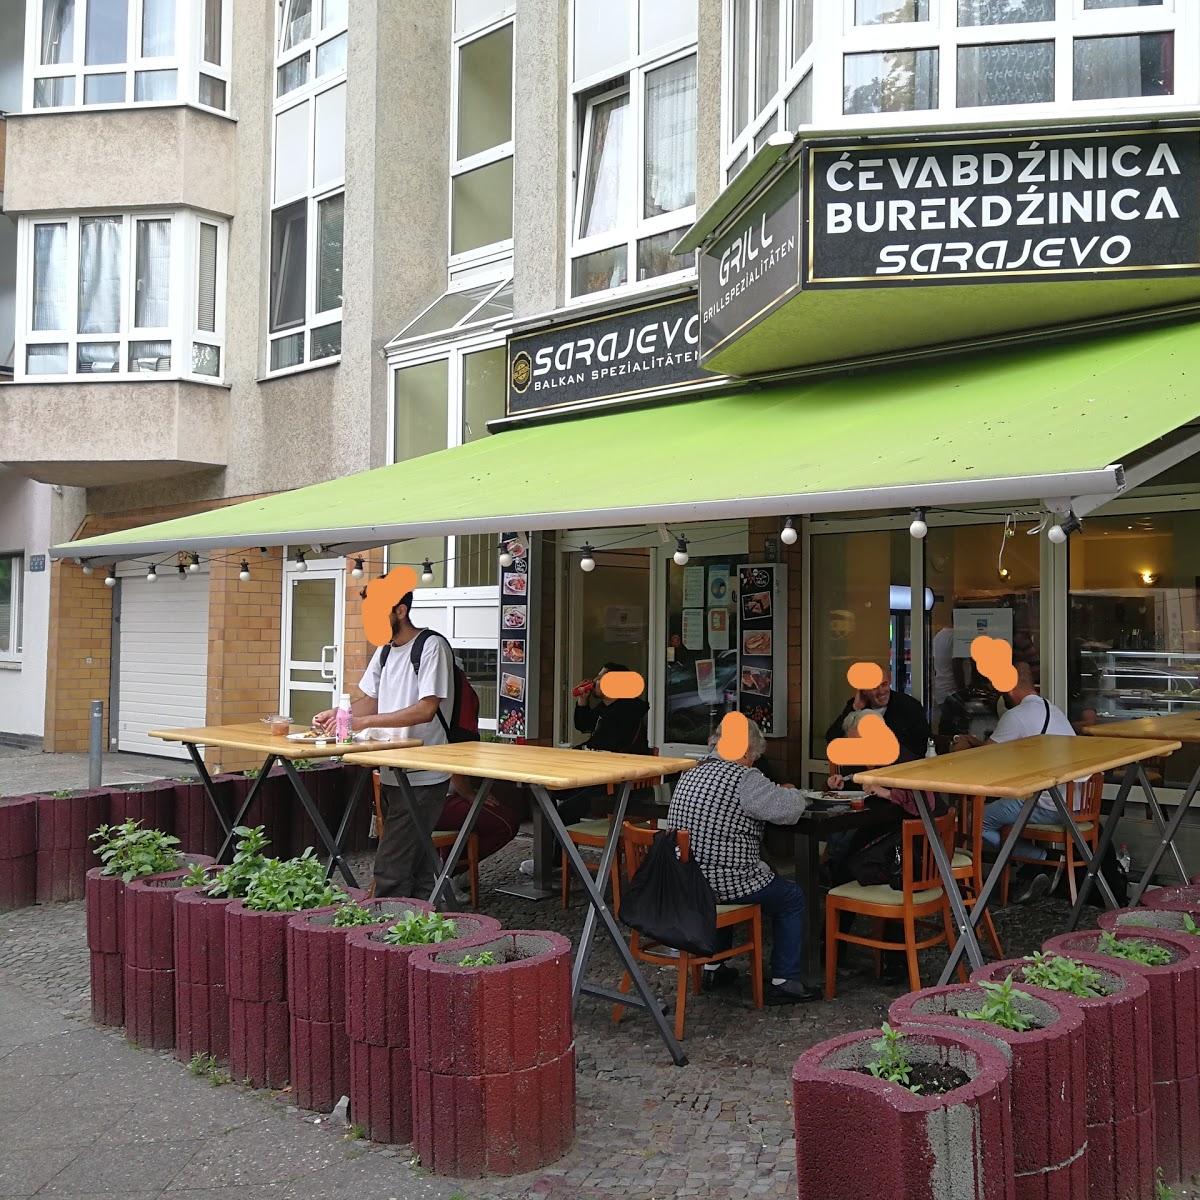 Restaurant "Sarajevo Berlin" in Berlin